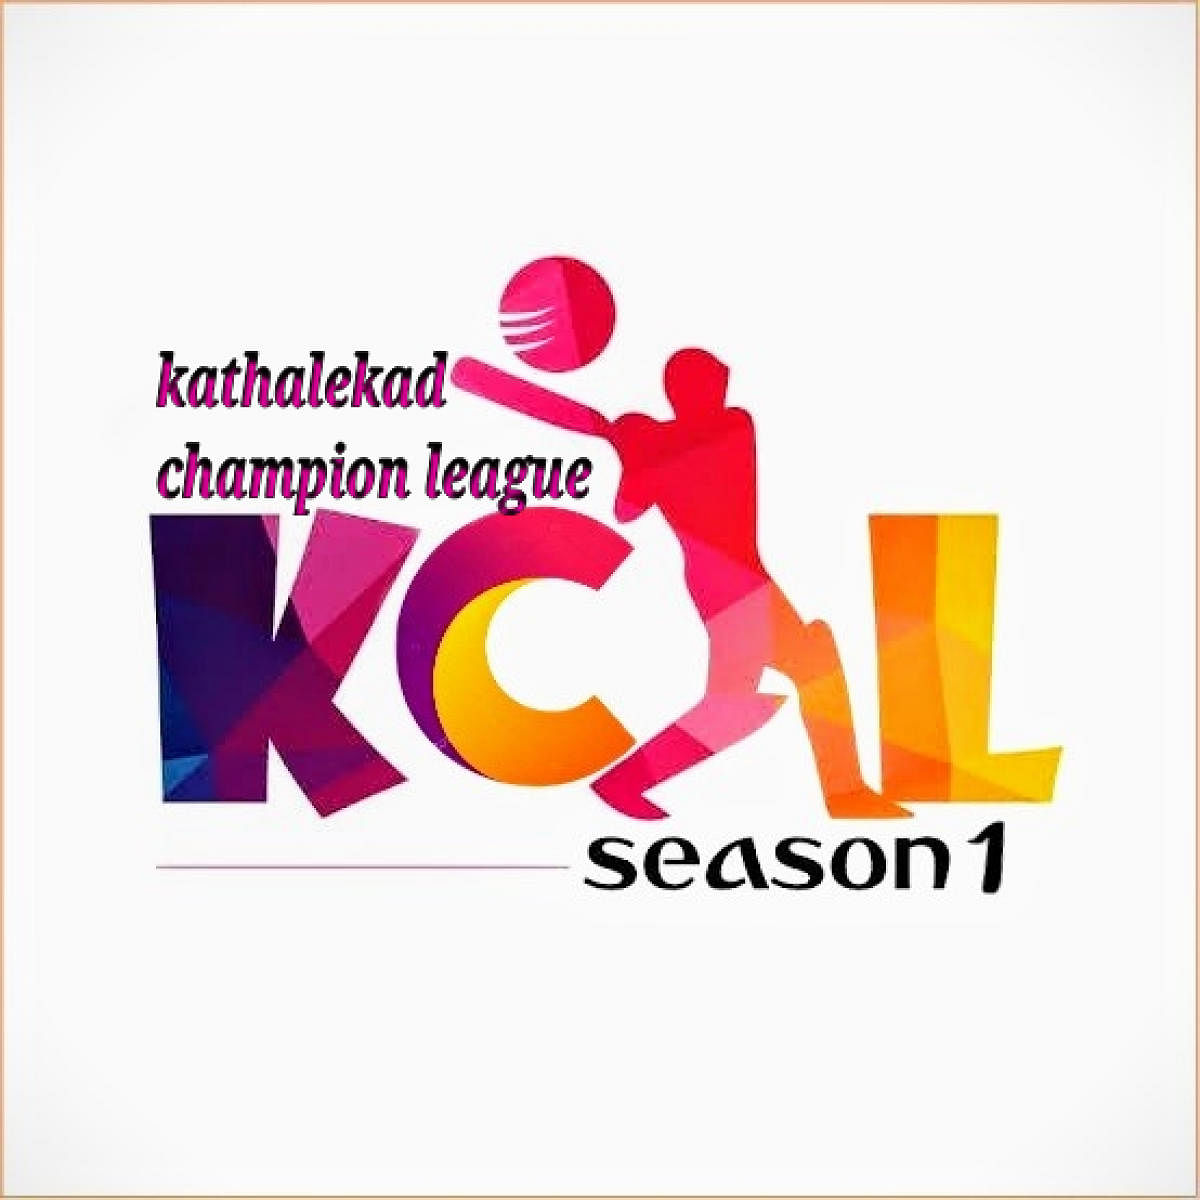 The logo of Kathalekad Champion League.